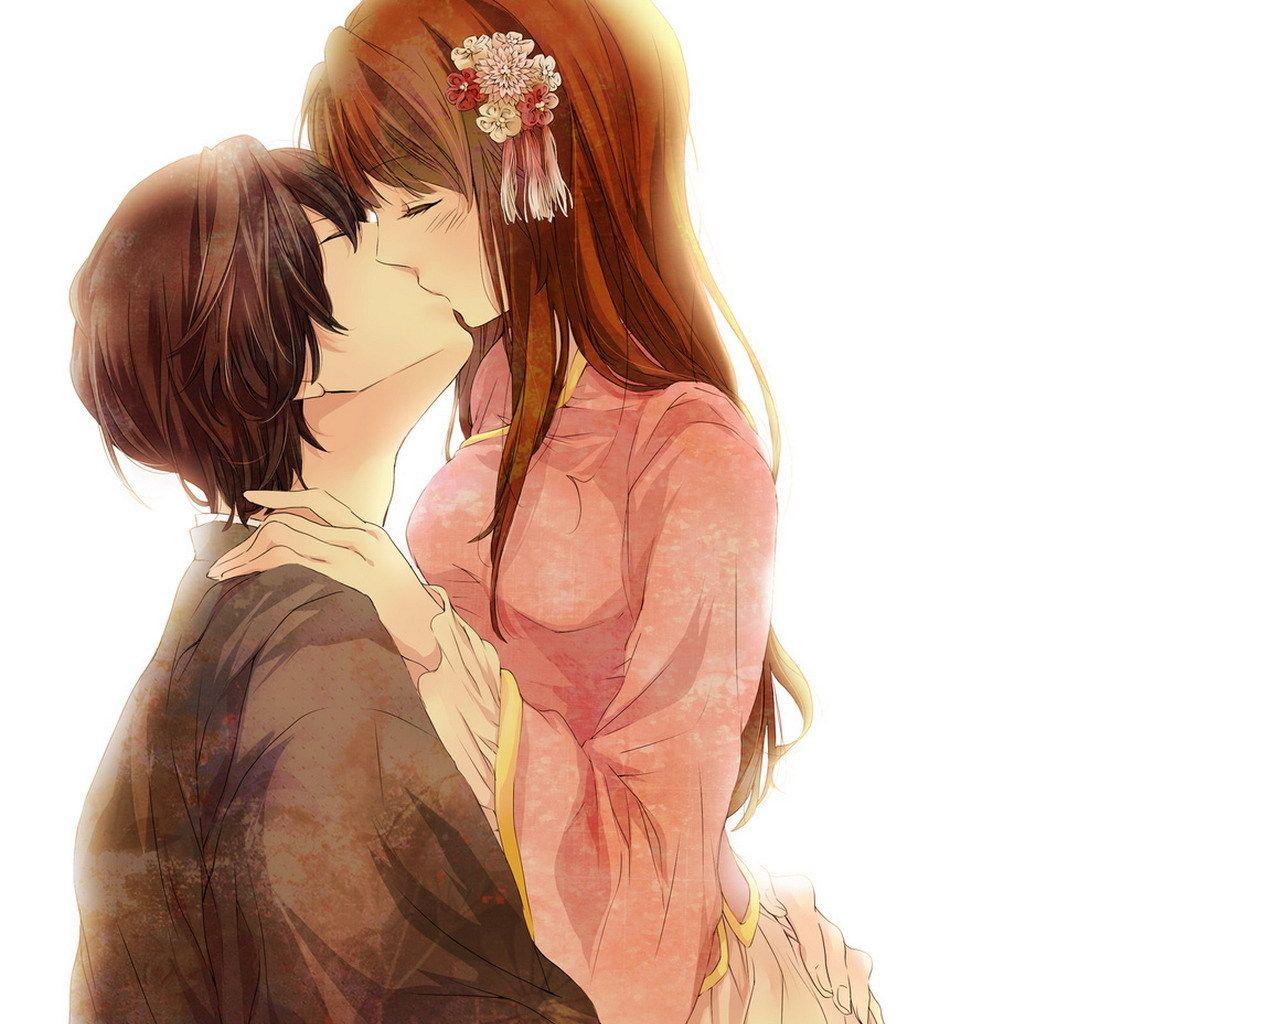 Anime Kiss - Other & Anime Background Wallpapers on Desktop Nexus (Image  737603)